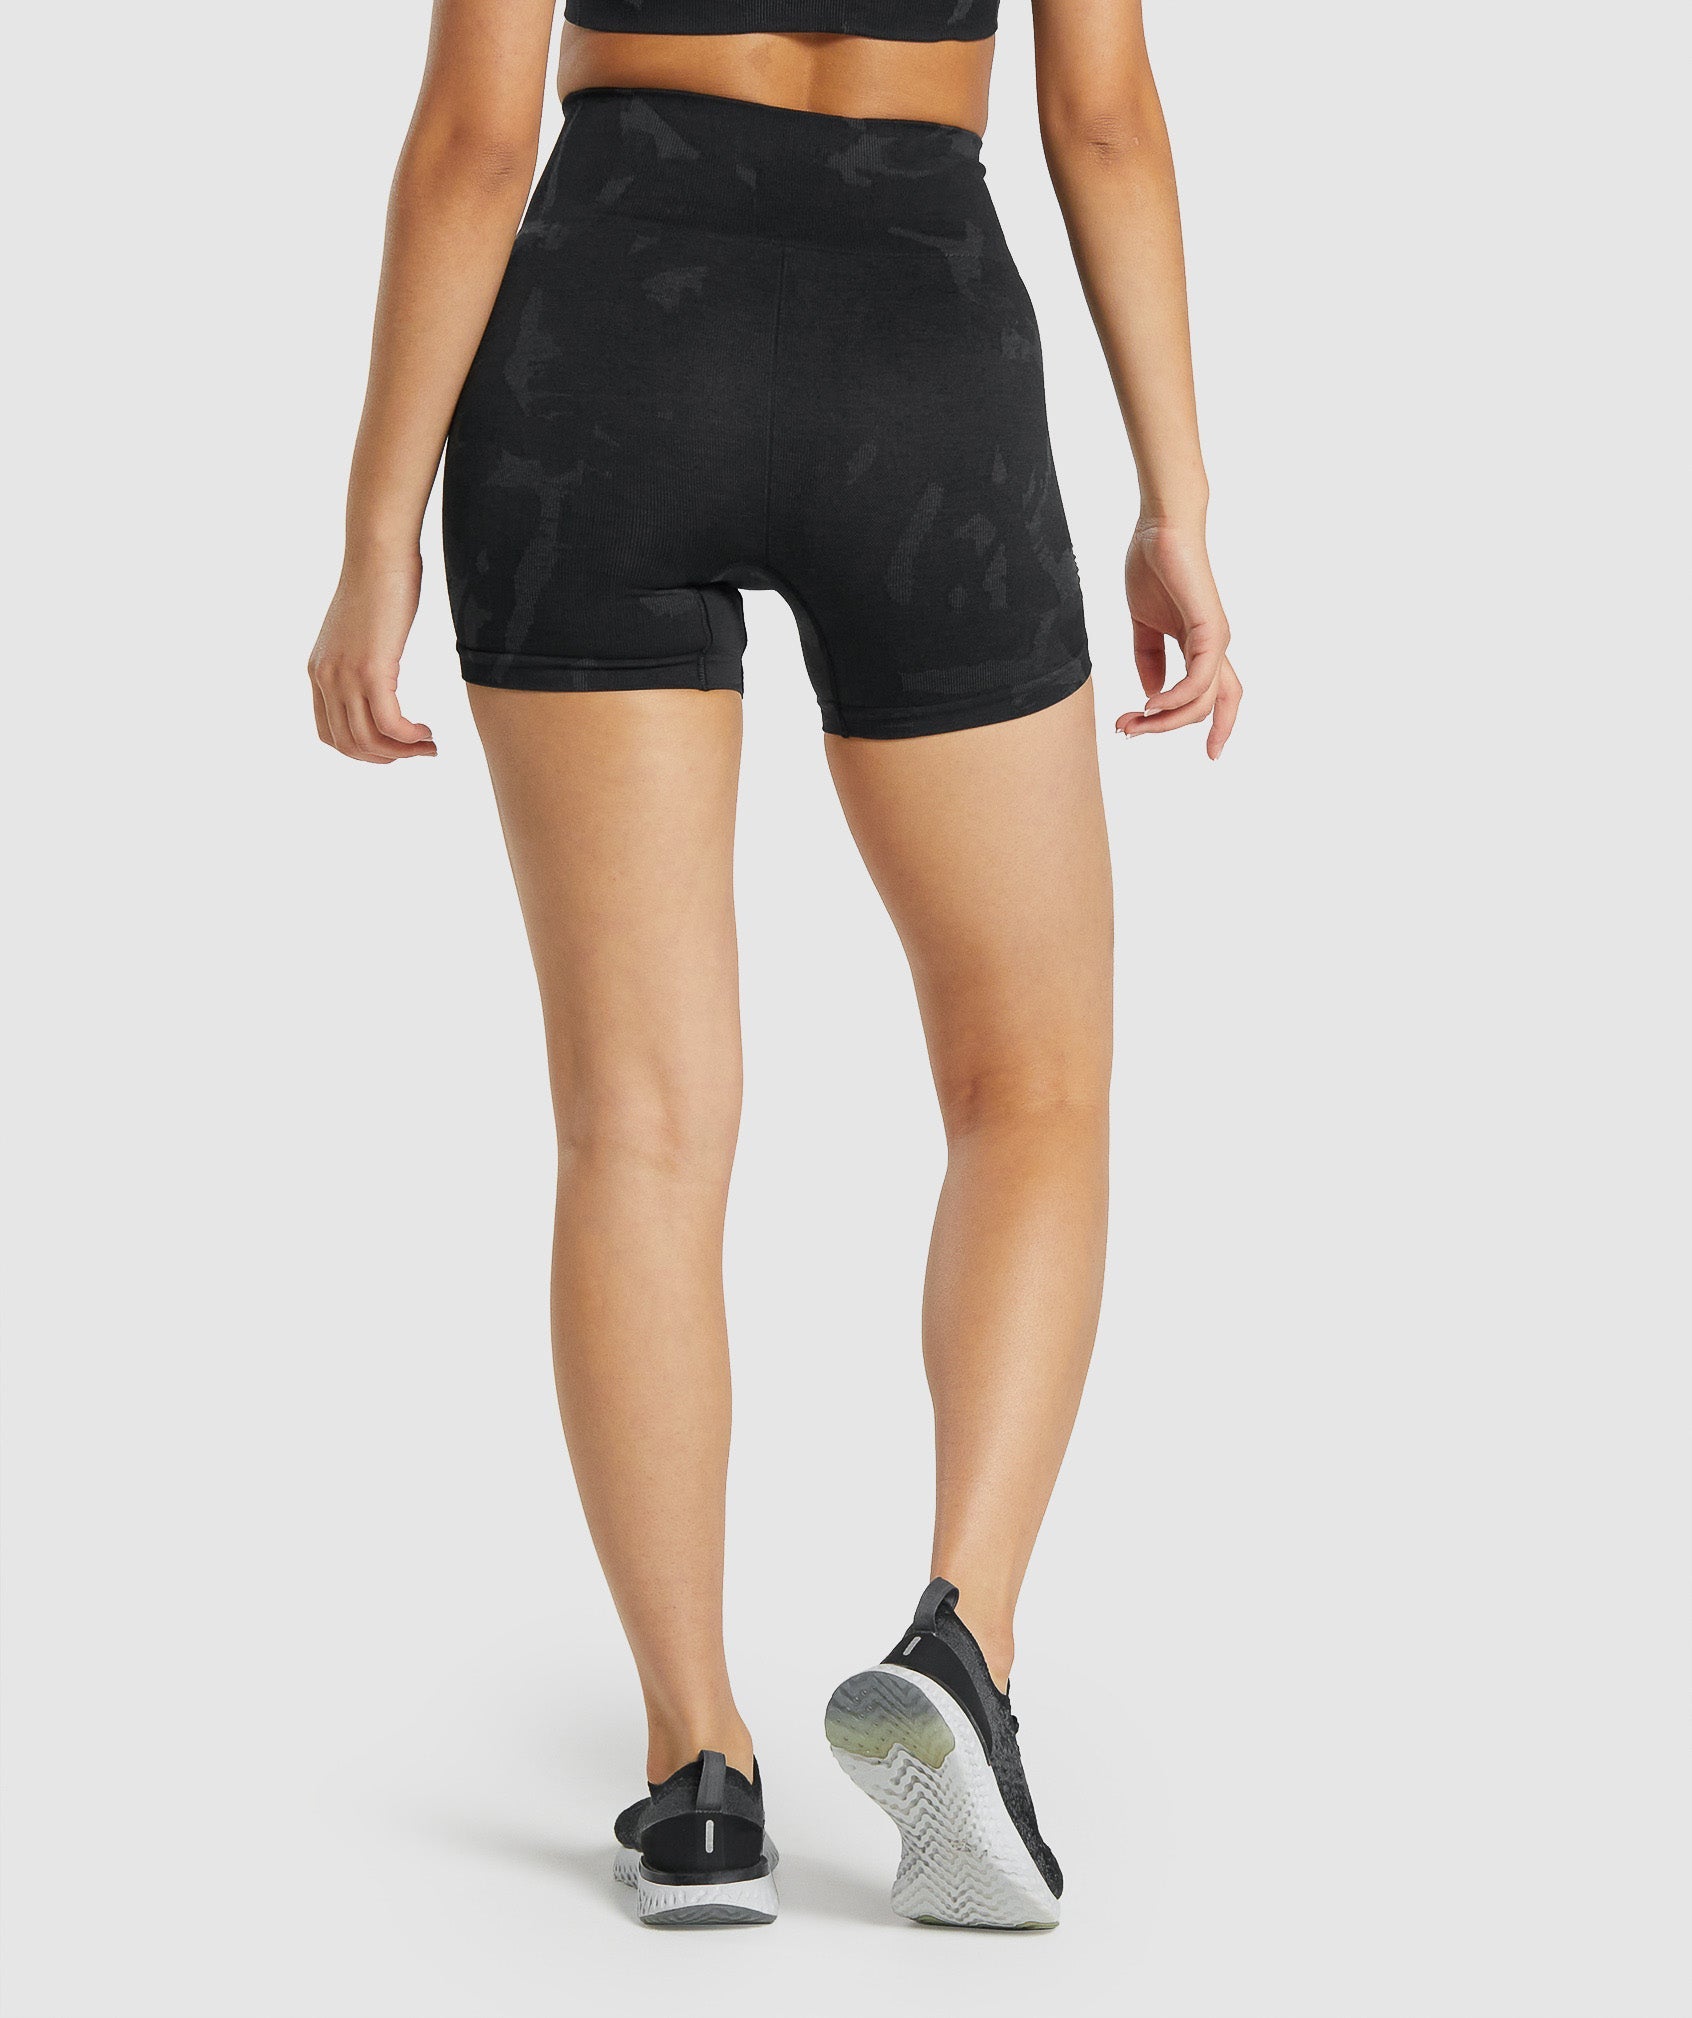 Shorts or leggings? I'm team leggings 🤭 @gymshark adapt camo seamless  bottoms DC: ANA 🩵 #gymsharkwomen #gymshark #gymoutfit #gy